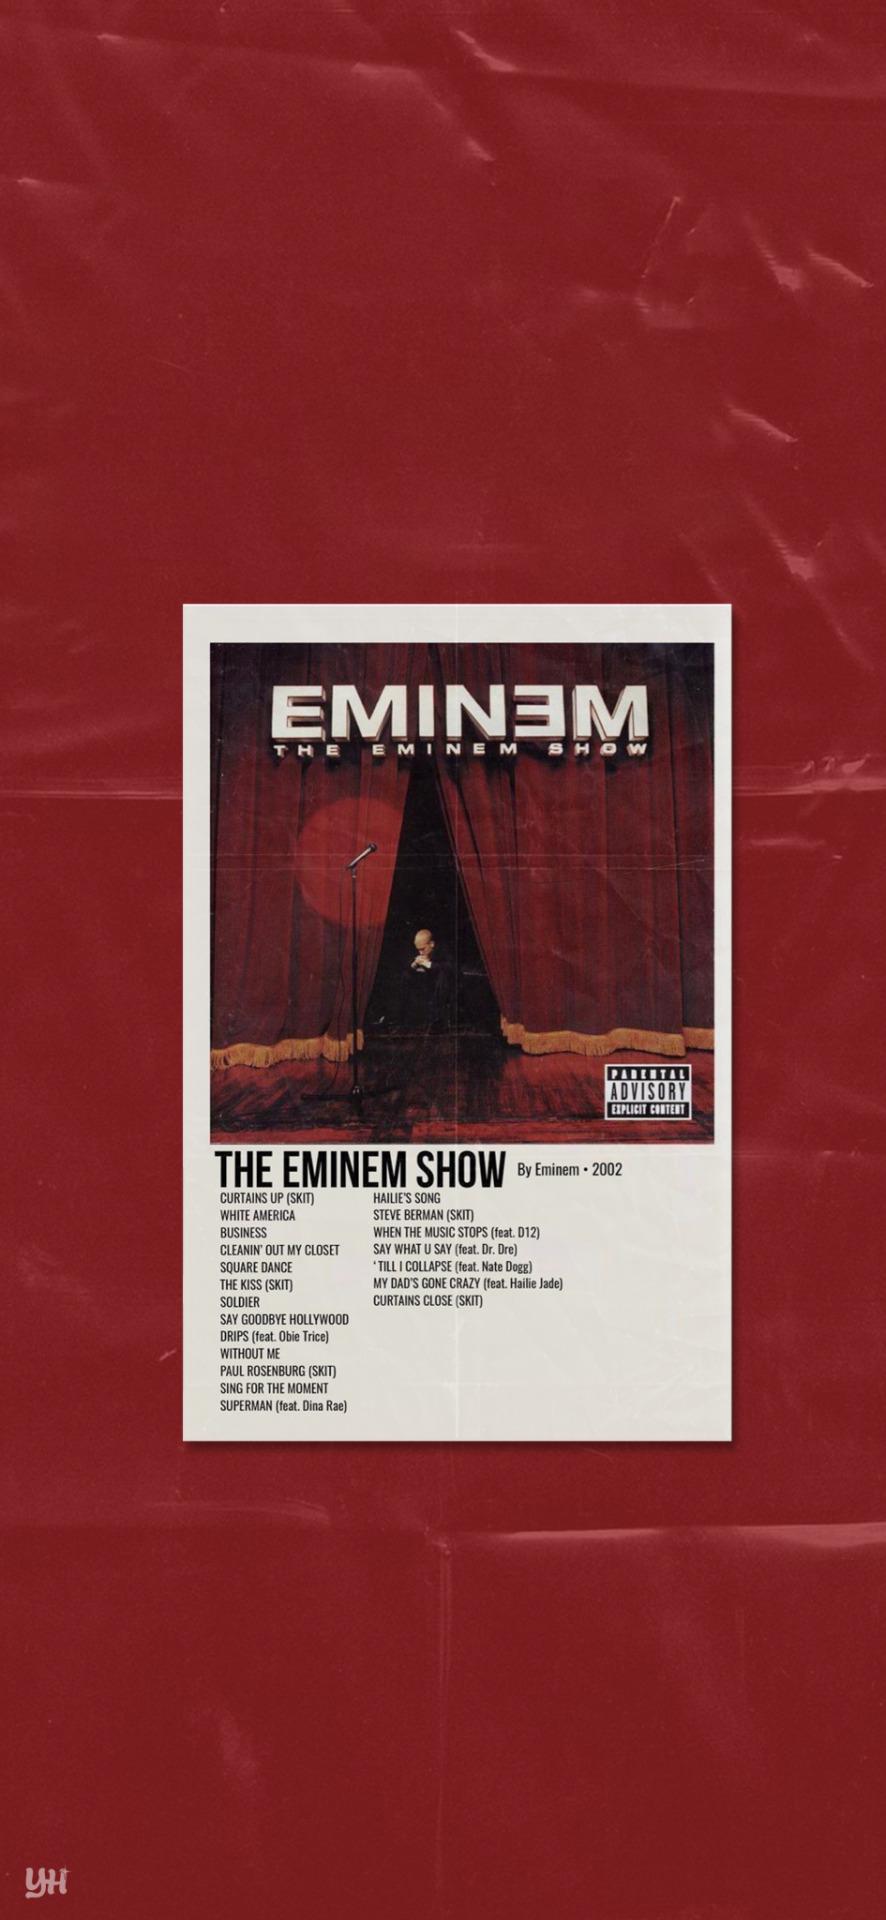 Eminem Aesthetic Wallpapers - Top Free Eminem Aesthetic Backgrounds ...